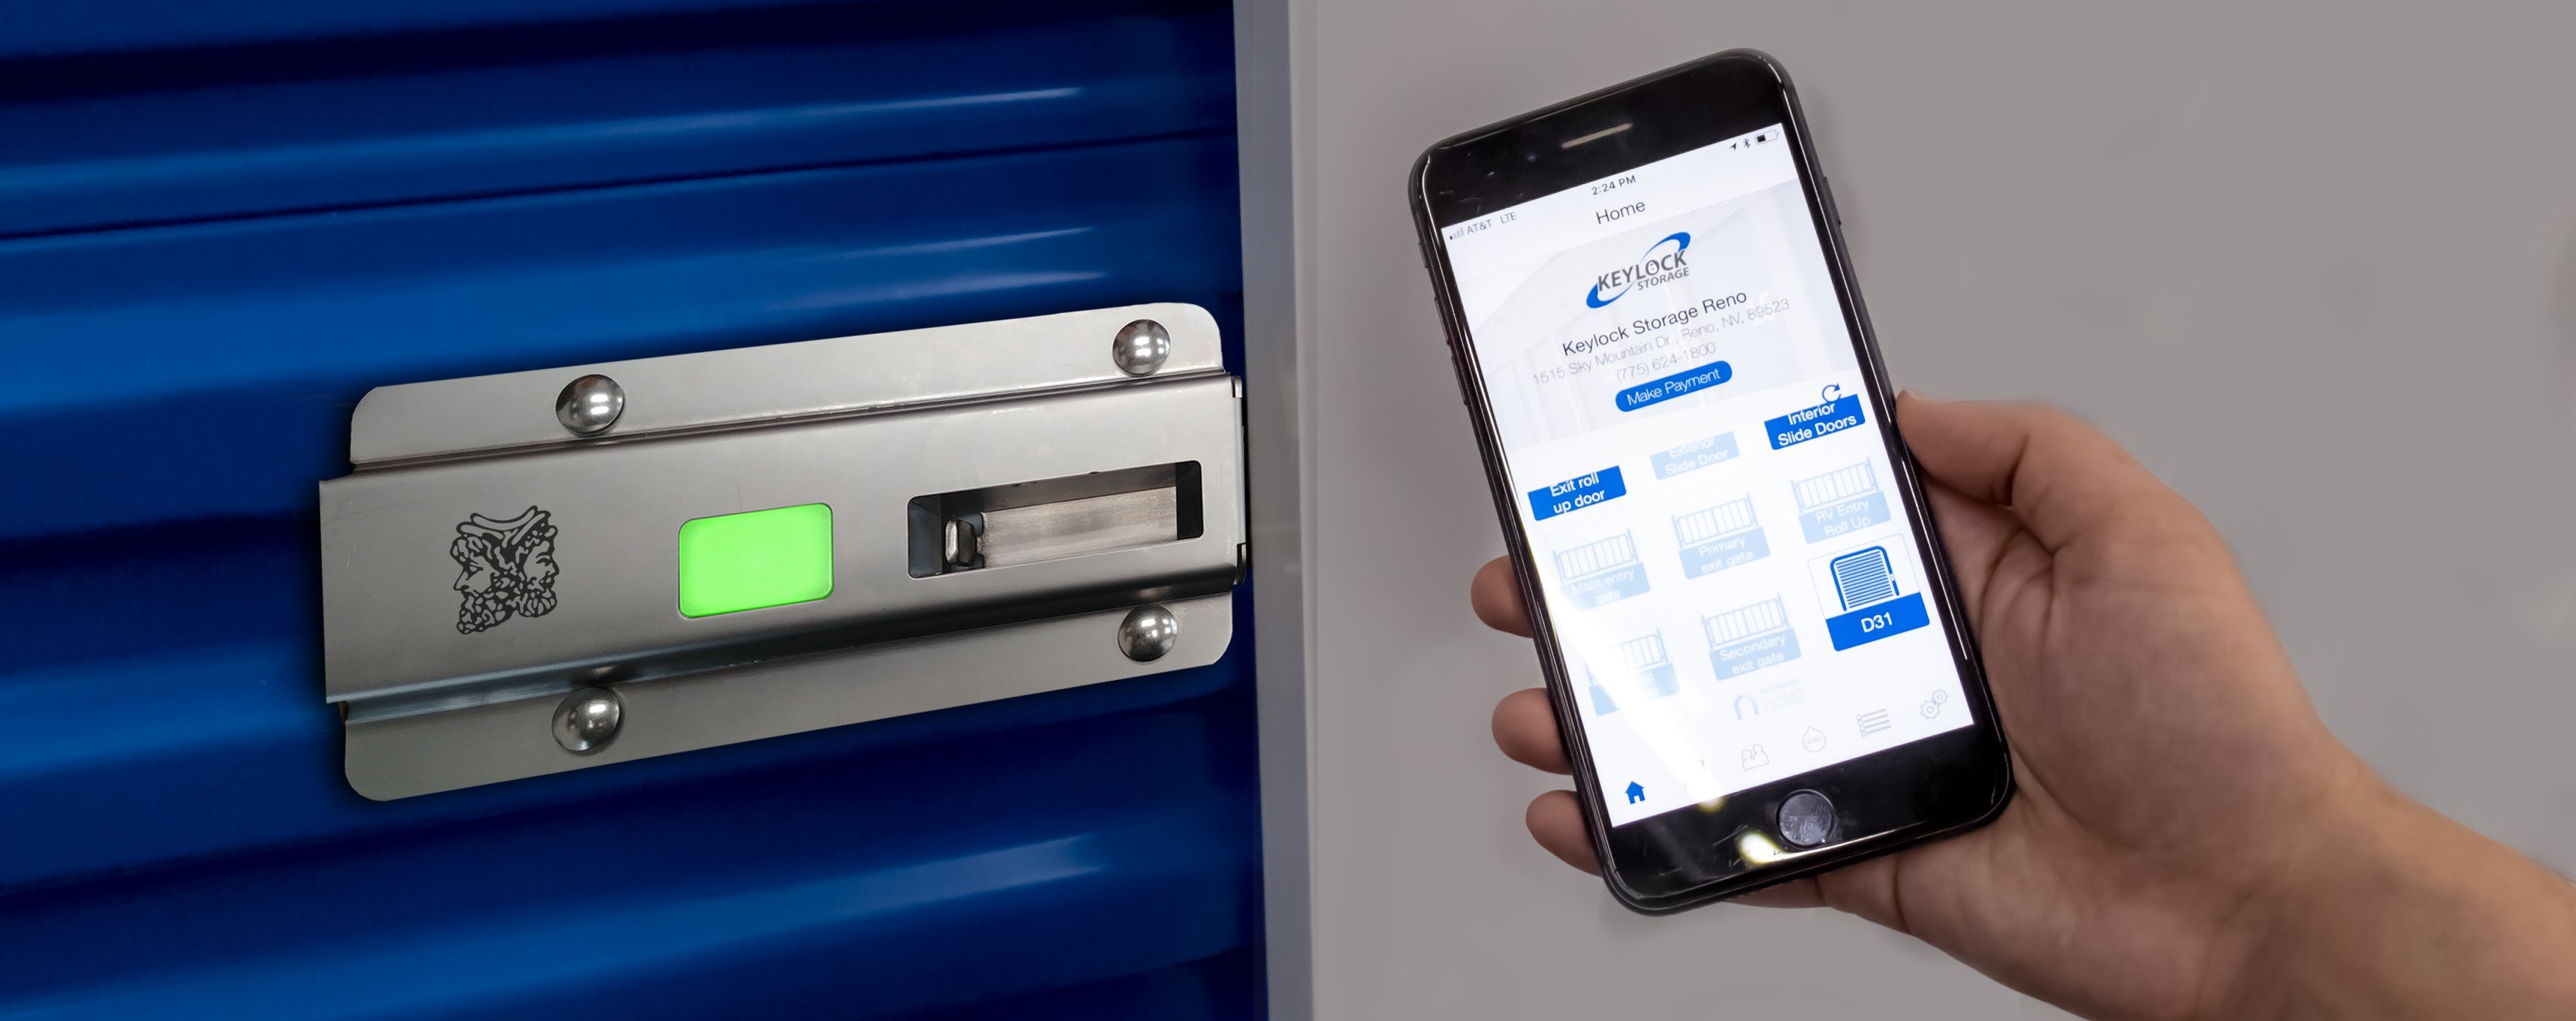 Noke ONE Smart Lock on Self-Storage Unit being unlocked with Smart Phone App